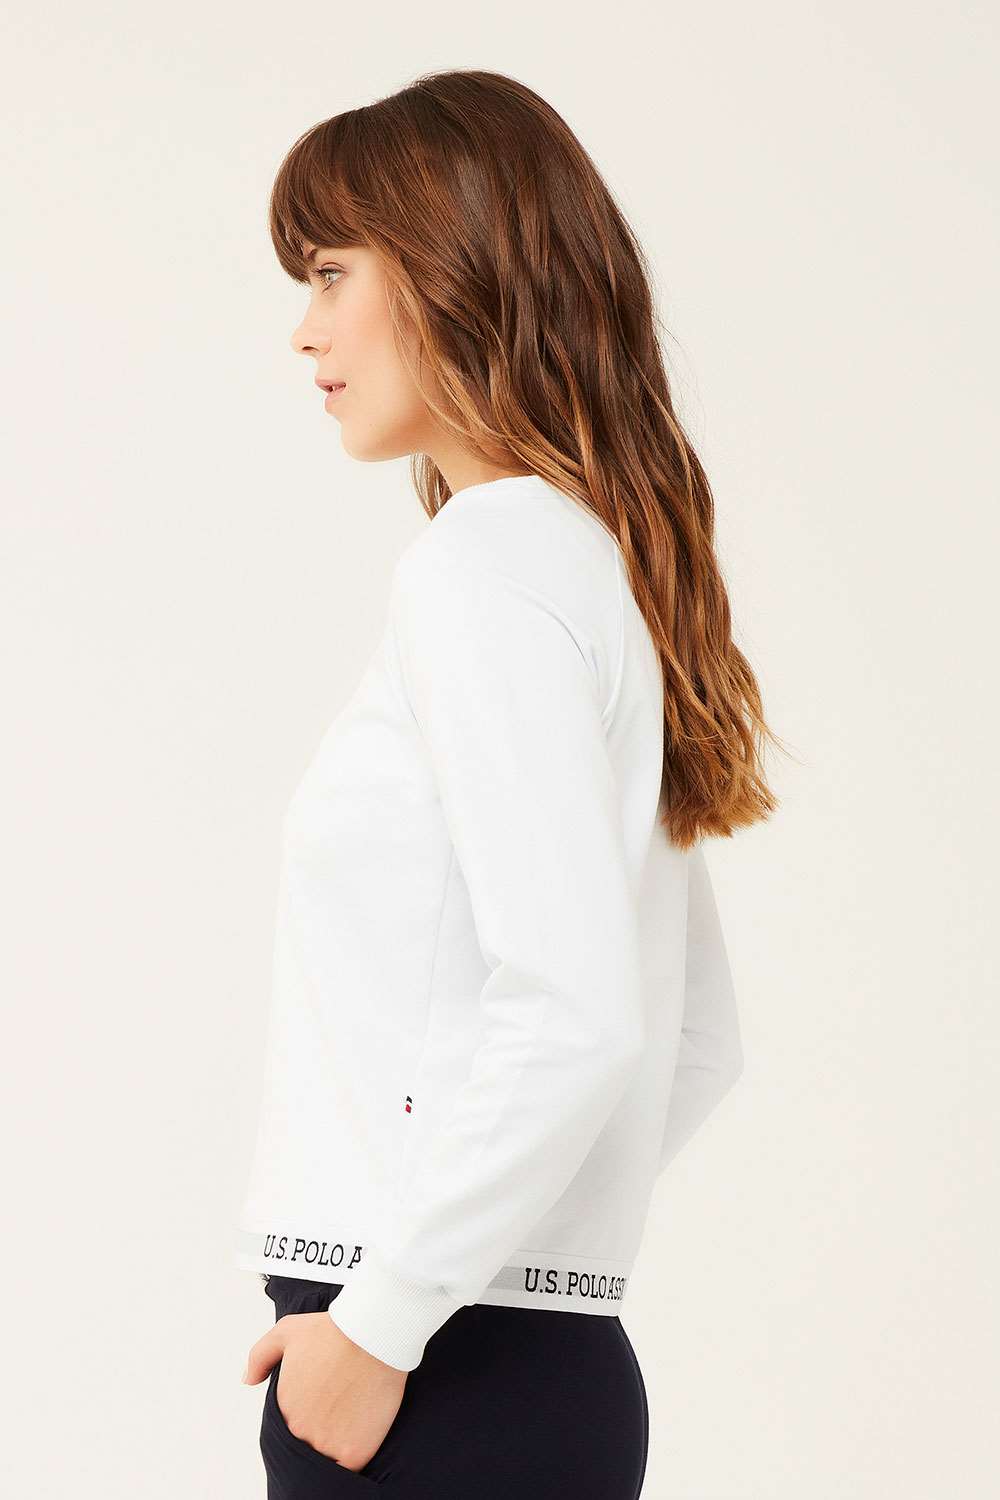 U.S. Polo Assn. Kadın Beyaz Yuvarlak Yaka Ev Giyim | Modcollection.com.tr